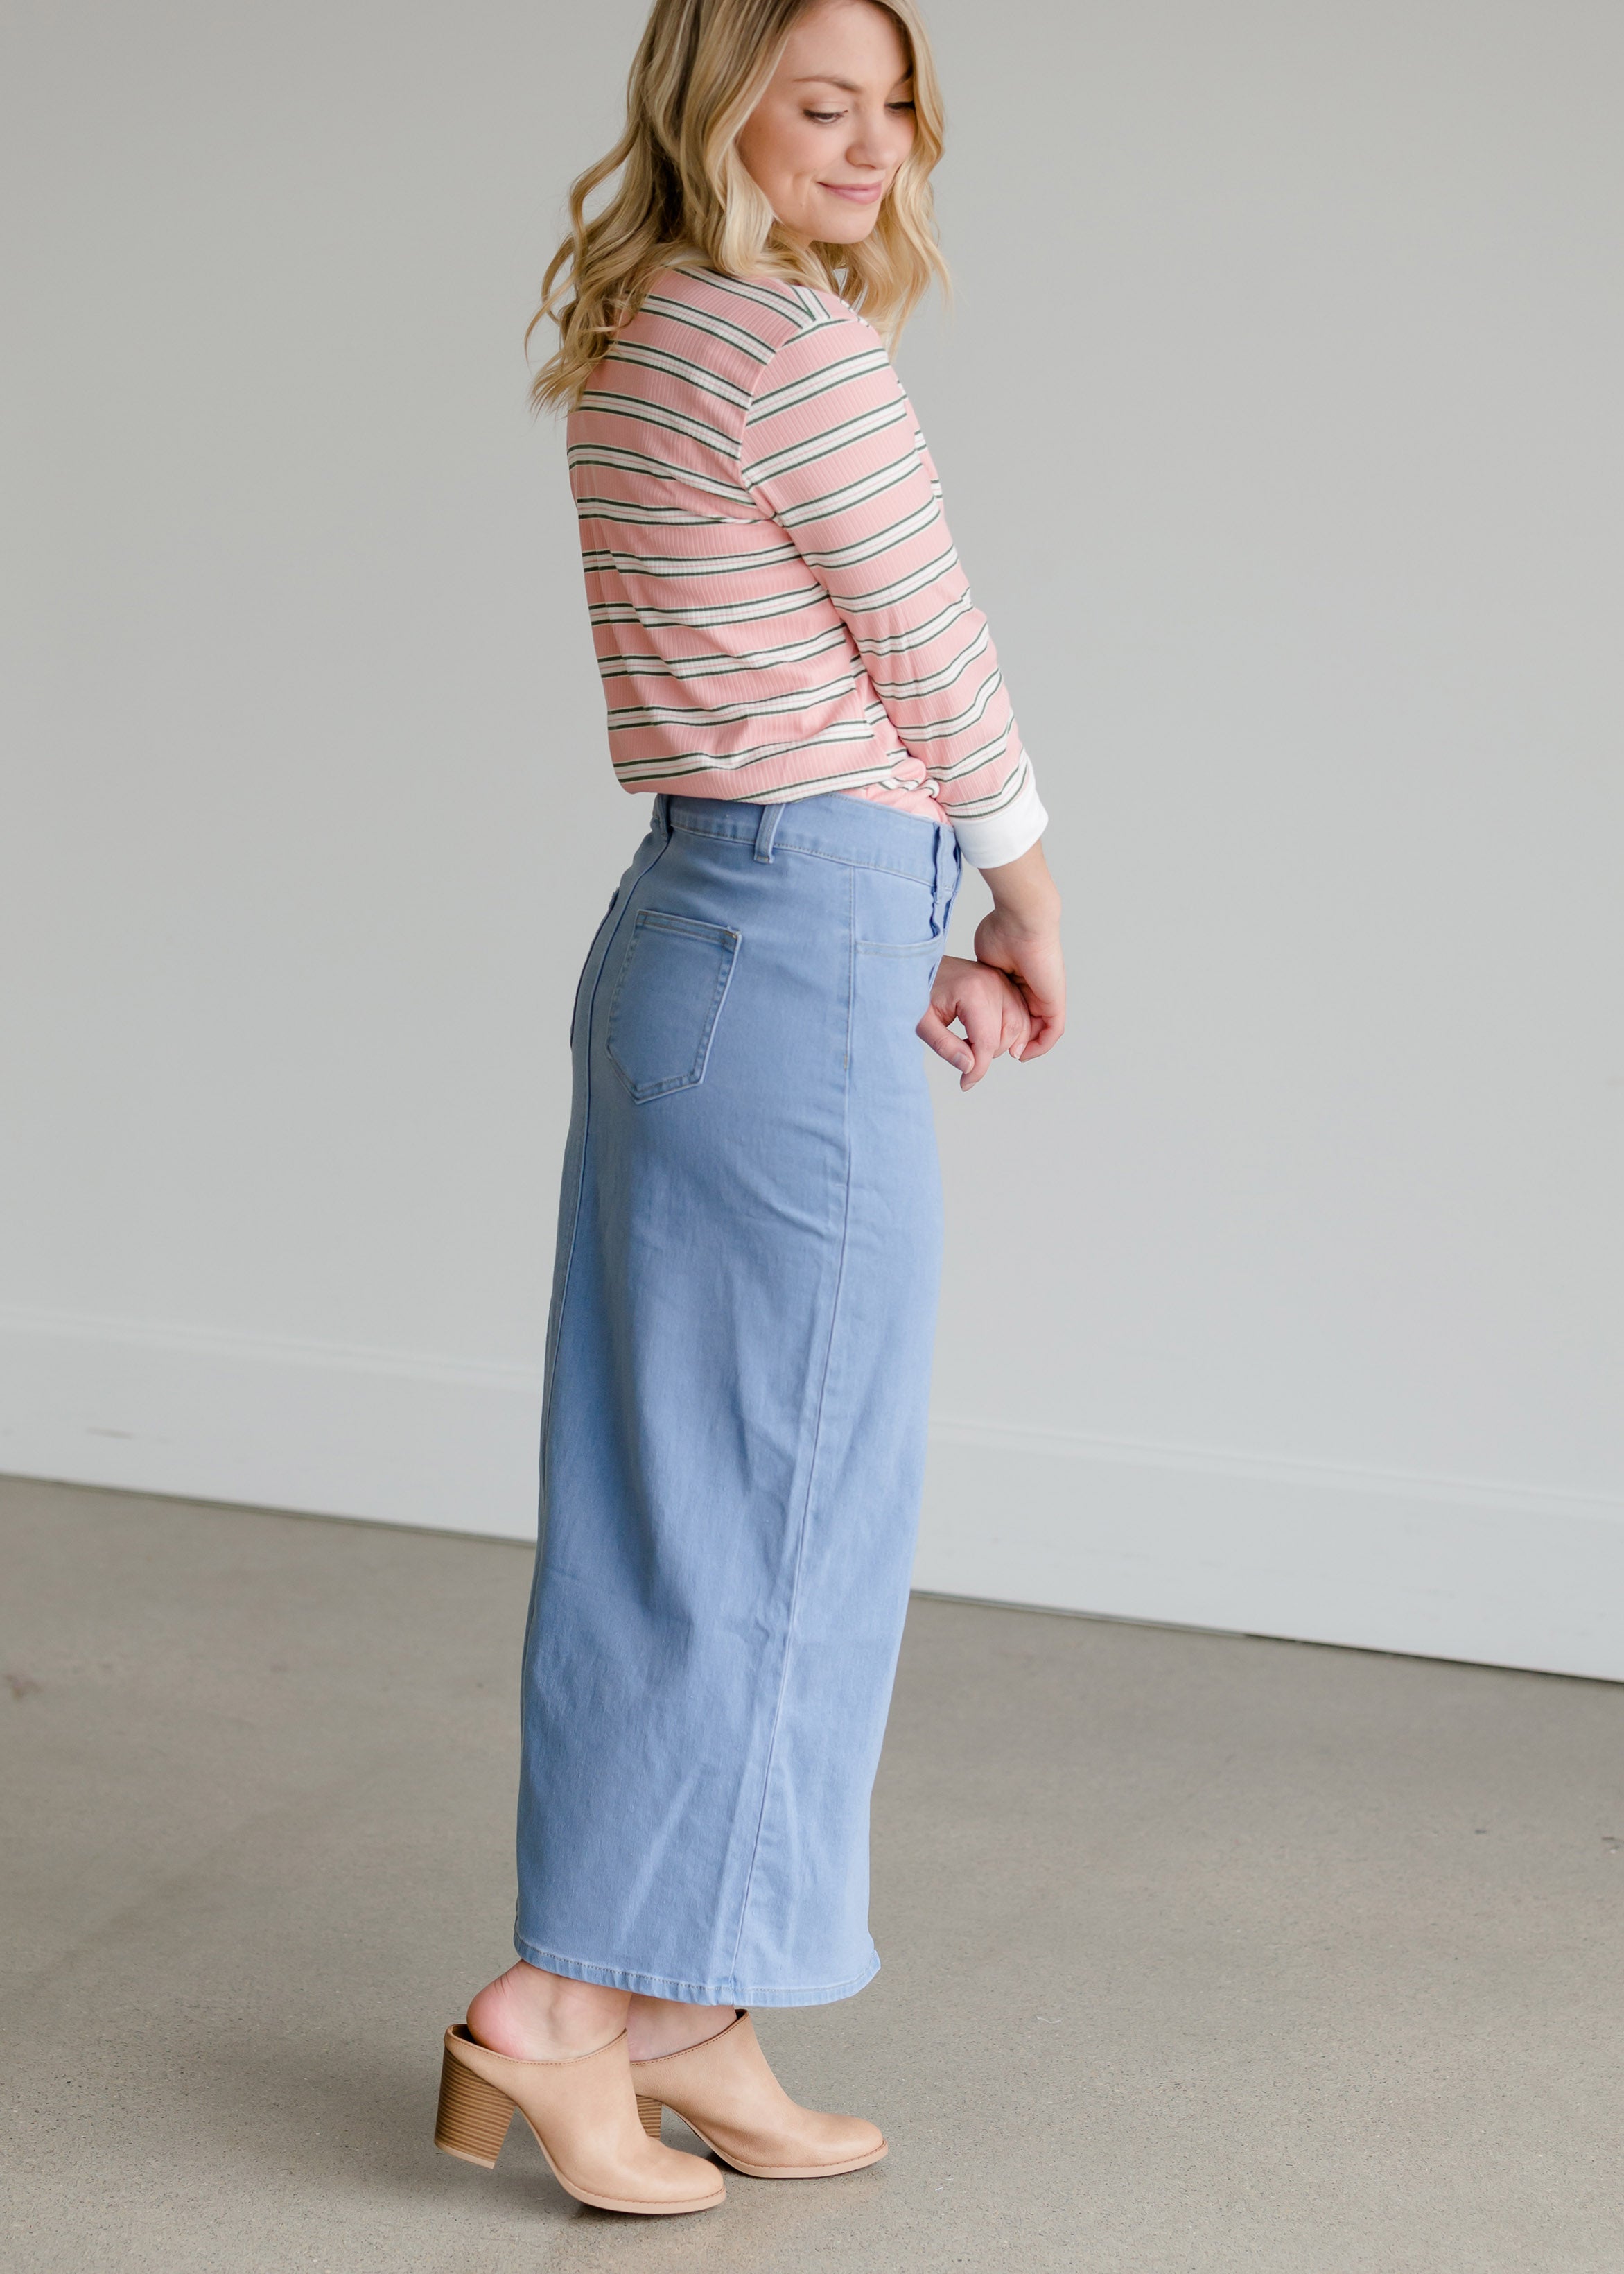 Buy ESTEEZ Denim Jean Skirts for Women Knee Length - Women's Straight  Pencil Stretch Denim Skirts - 0-24 Plus Size - Boston, Classic Blue, 10 at  Amazon.in